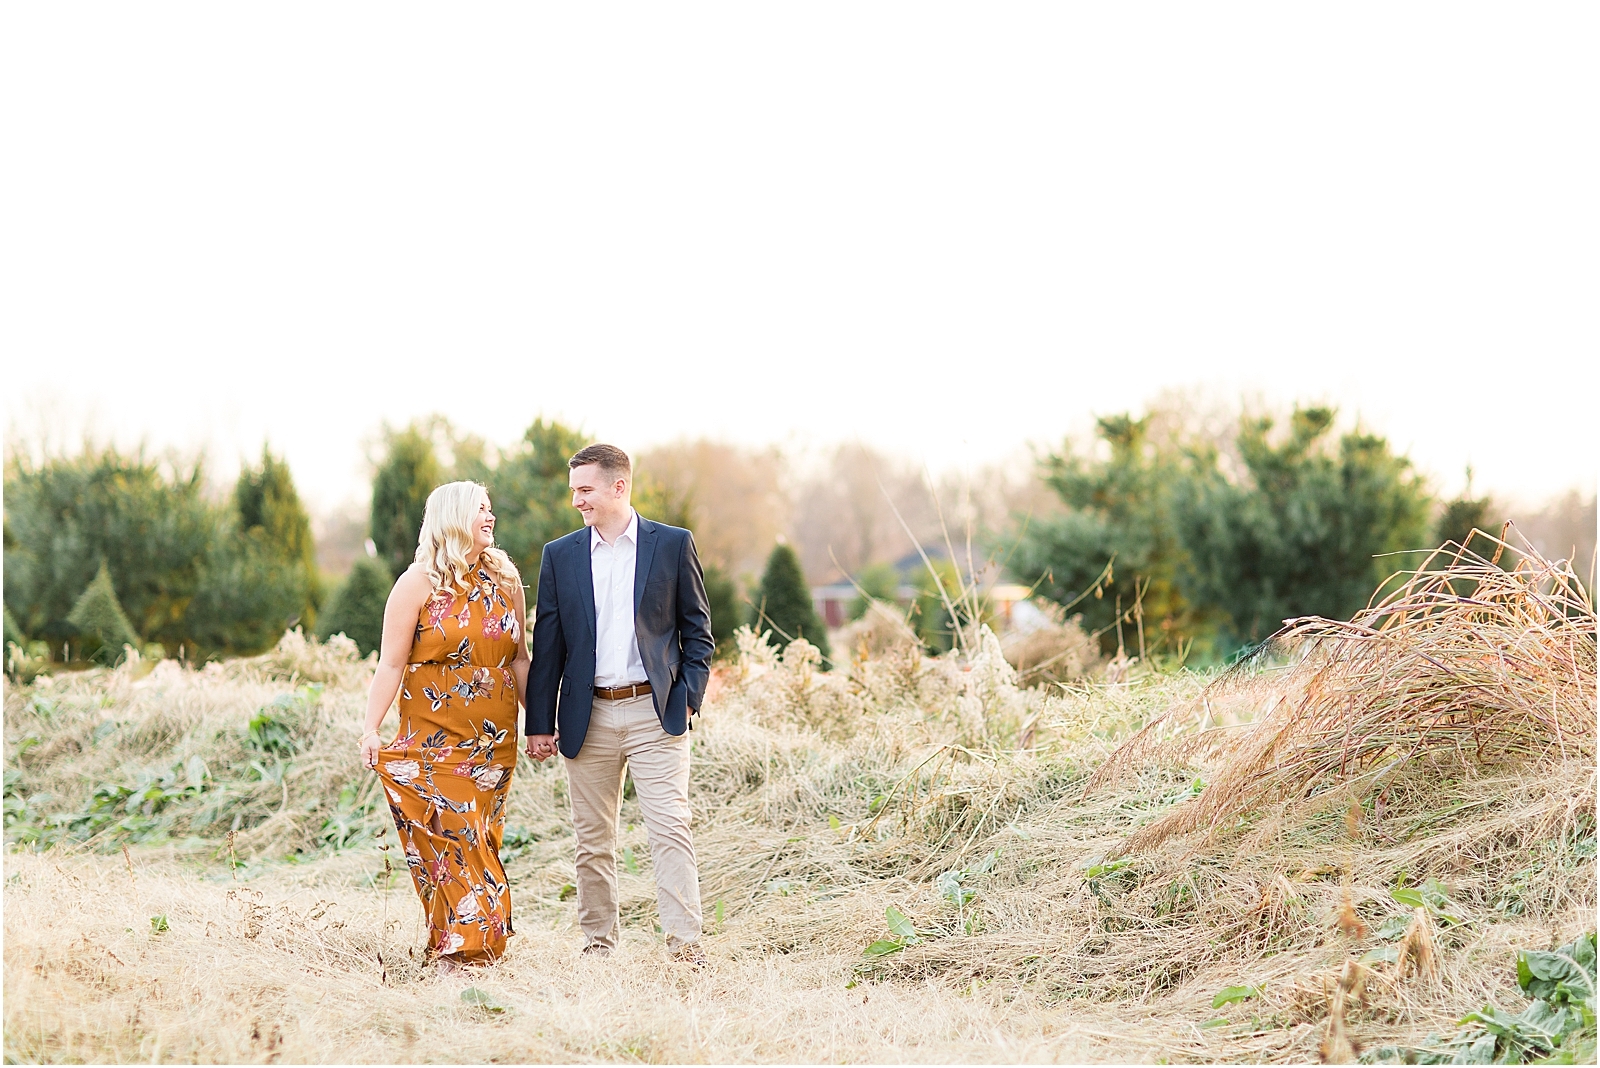 Haylee and Dillon | Evansville Wedding Photographer0017.jpg